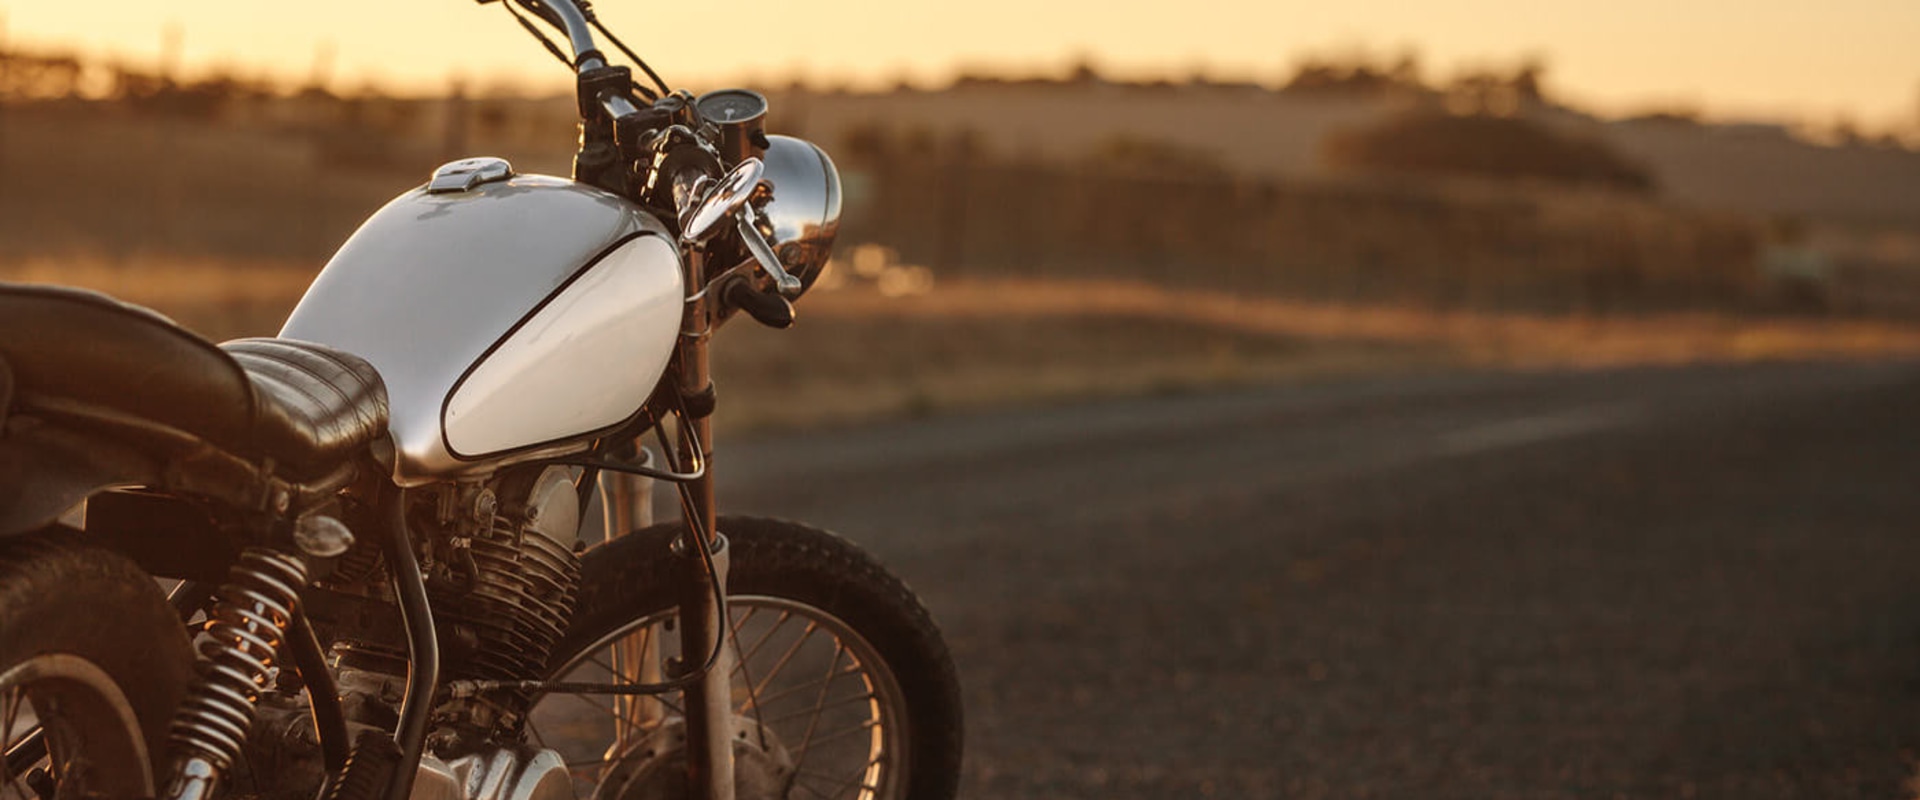 Low Rate Vintage Motorcycle Insurance